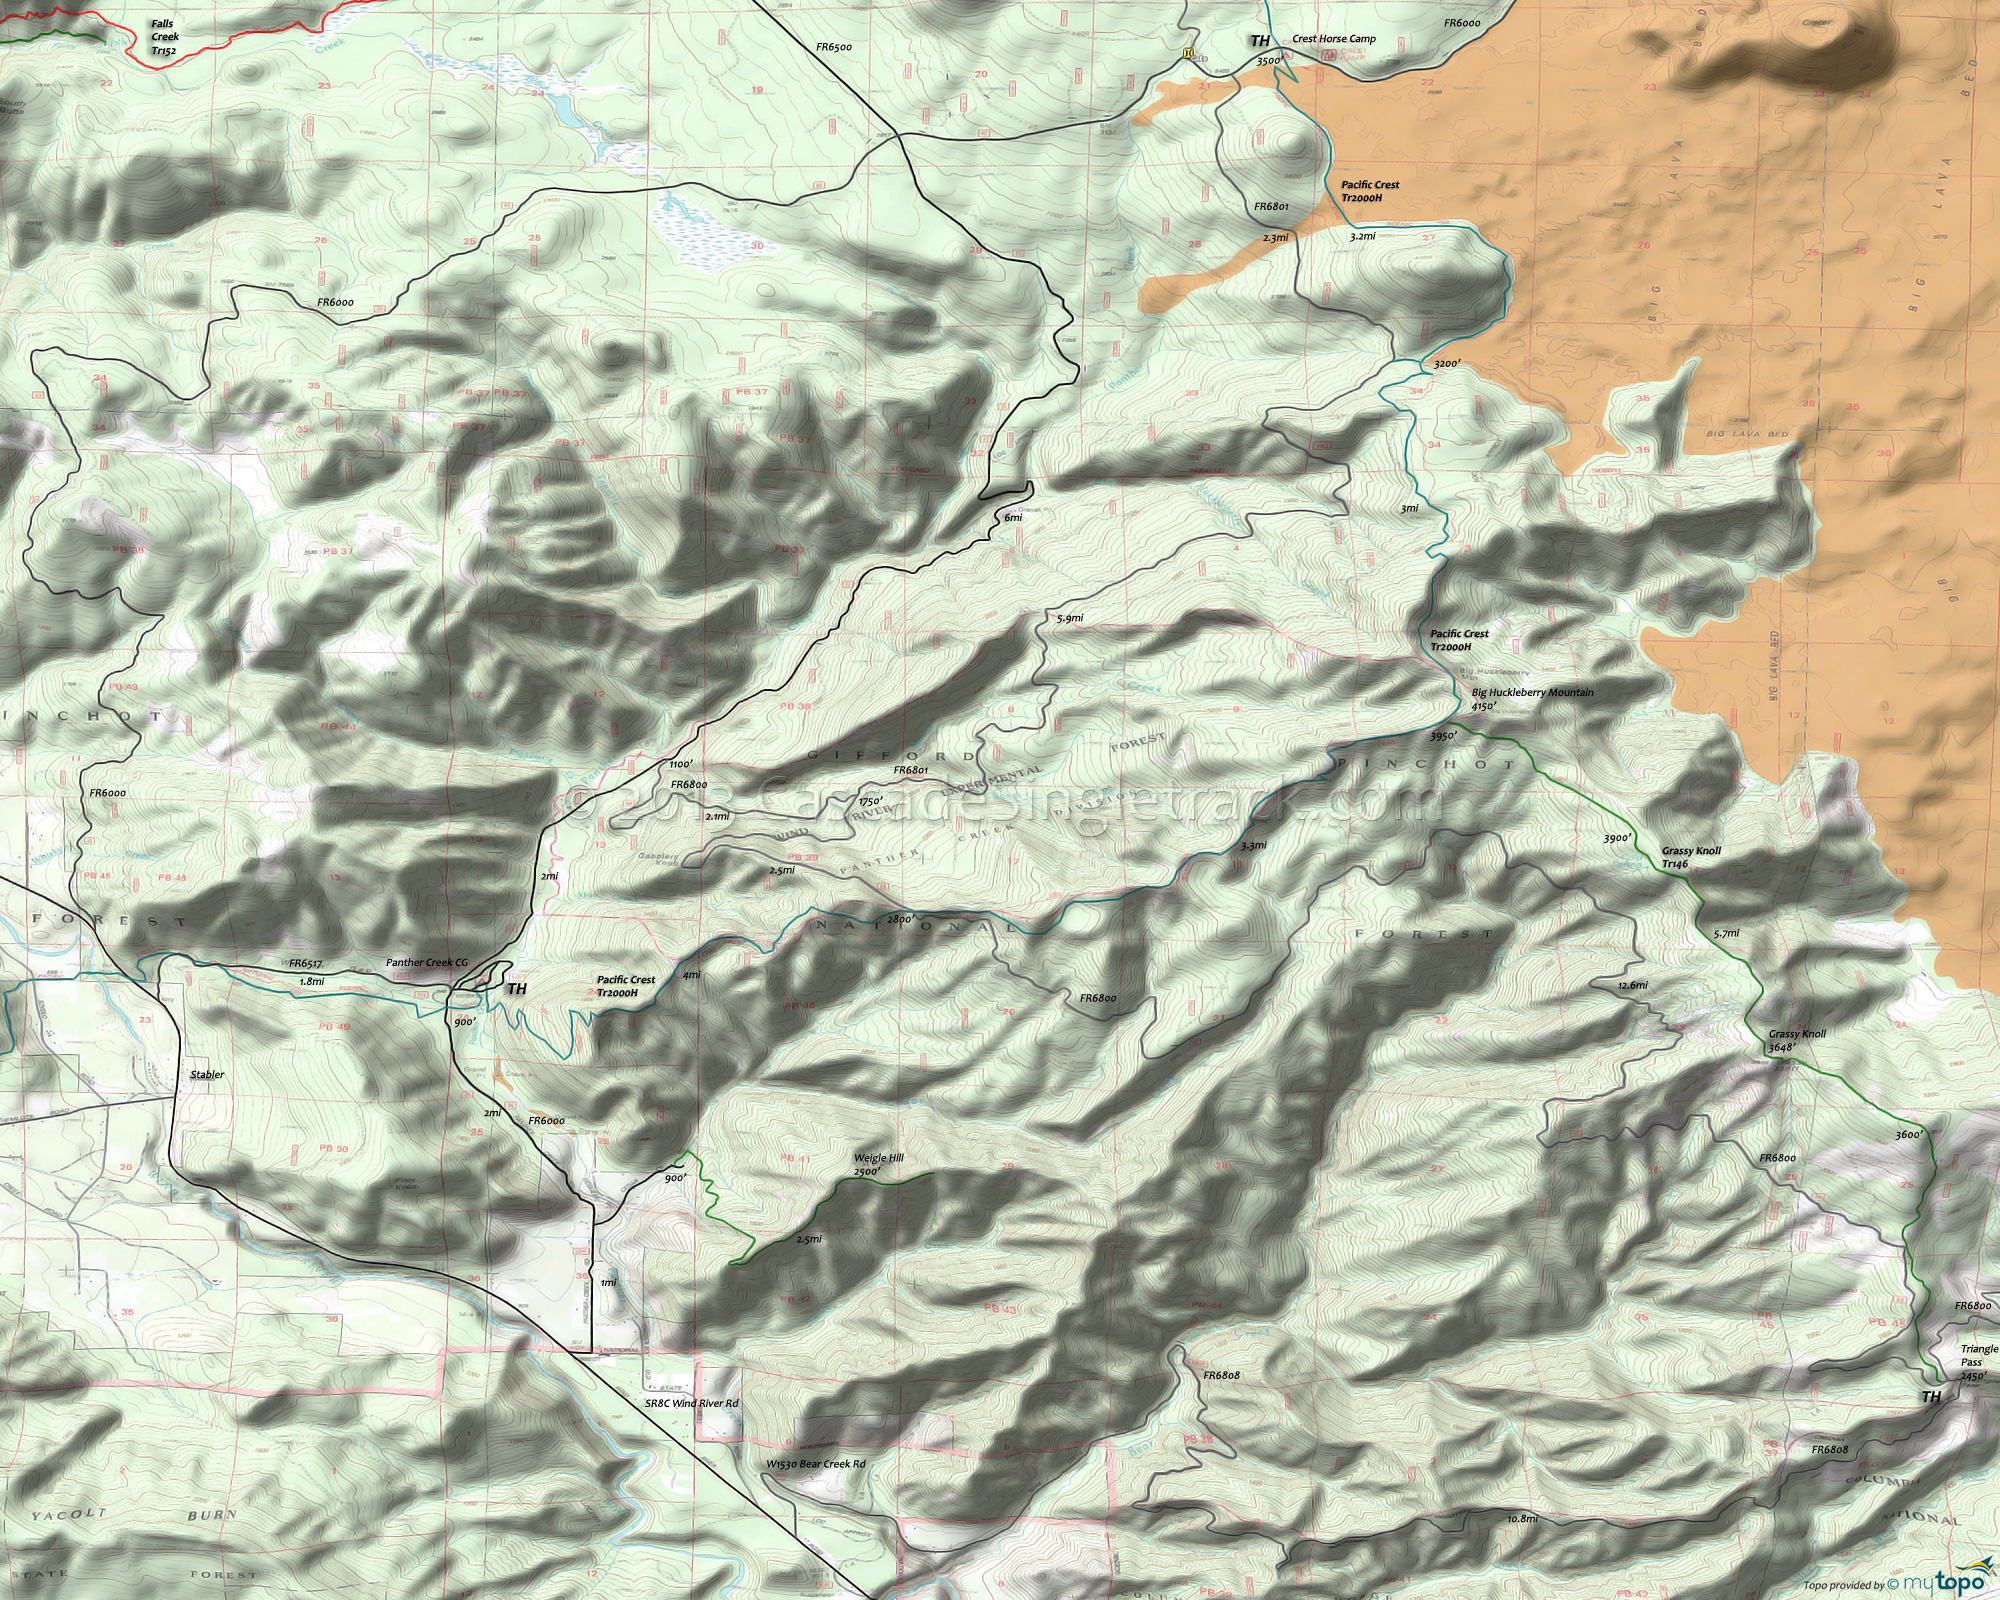 Grassy Knoll Trail 146, Pacific Crest Trail 2000-H Trails Area Topo Map